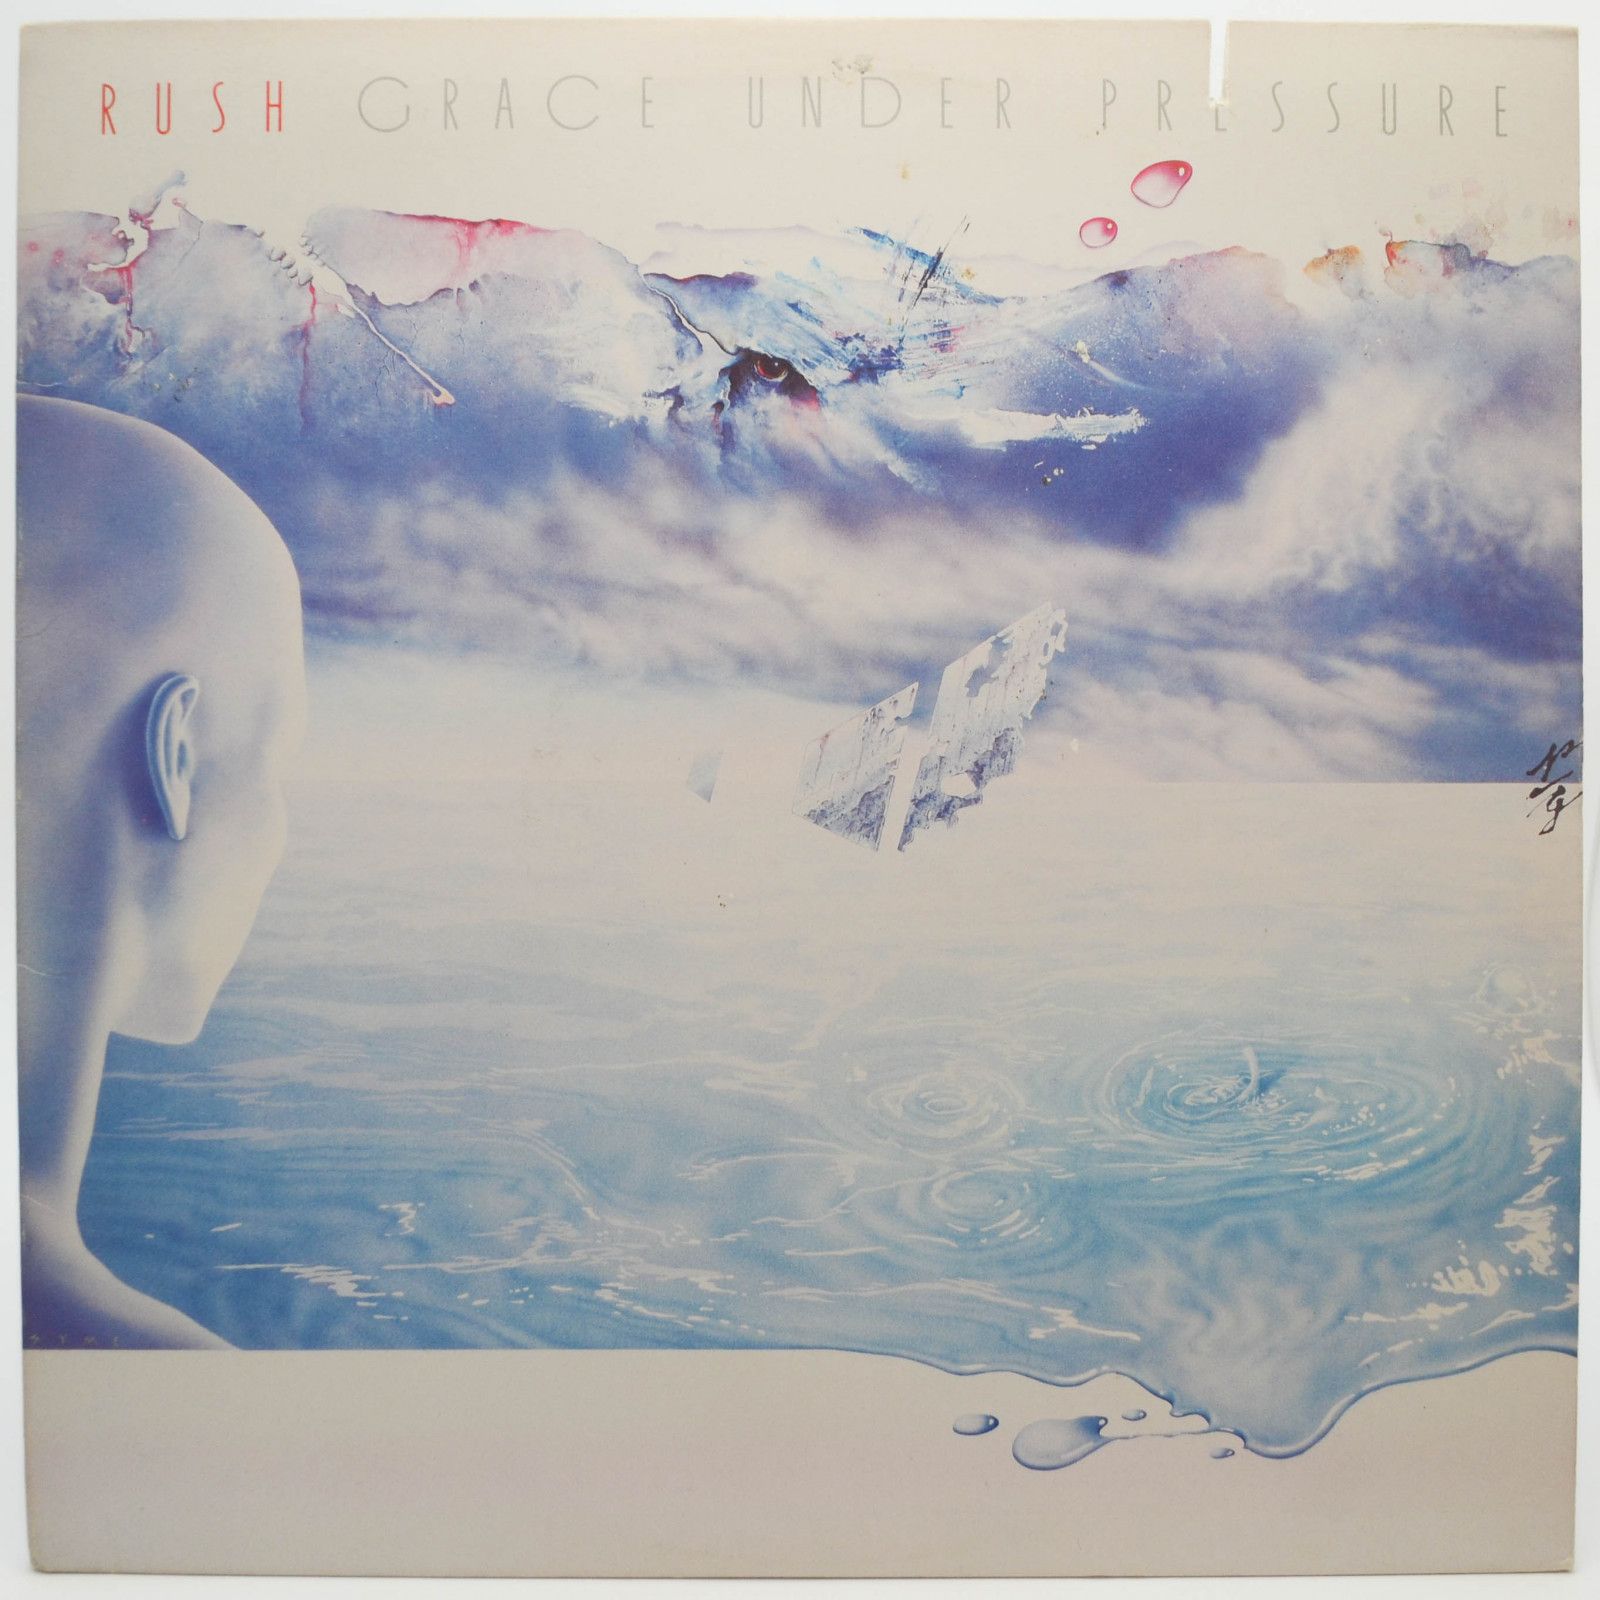 Rush — Grace Under Pressure (USA), 1984